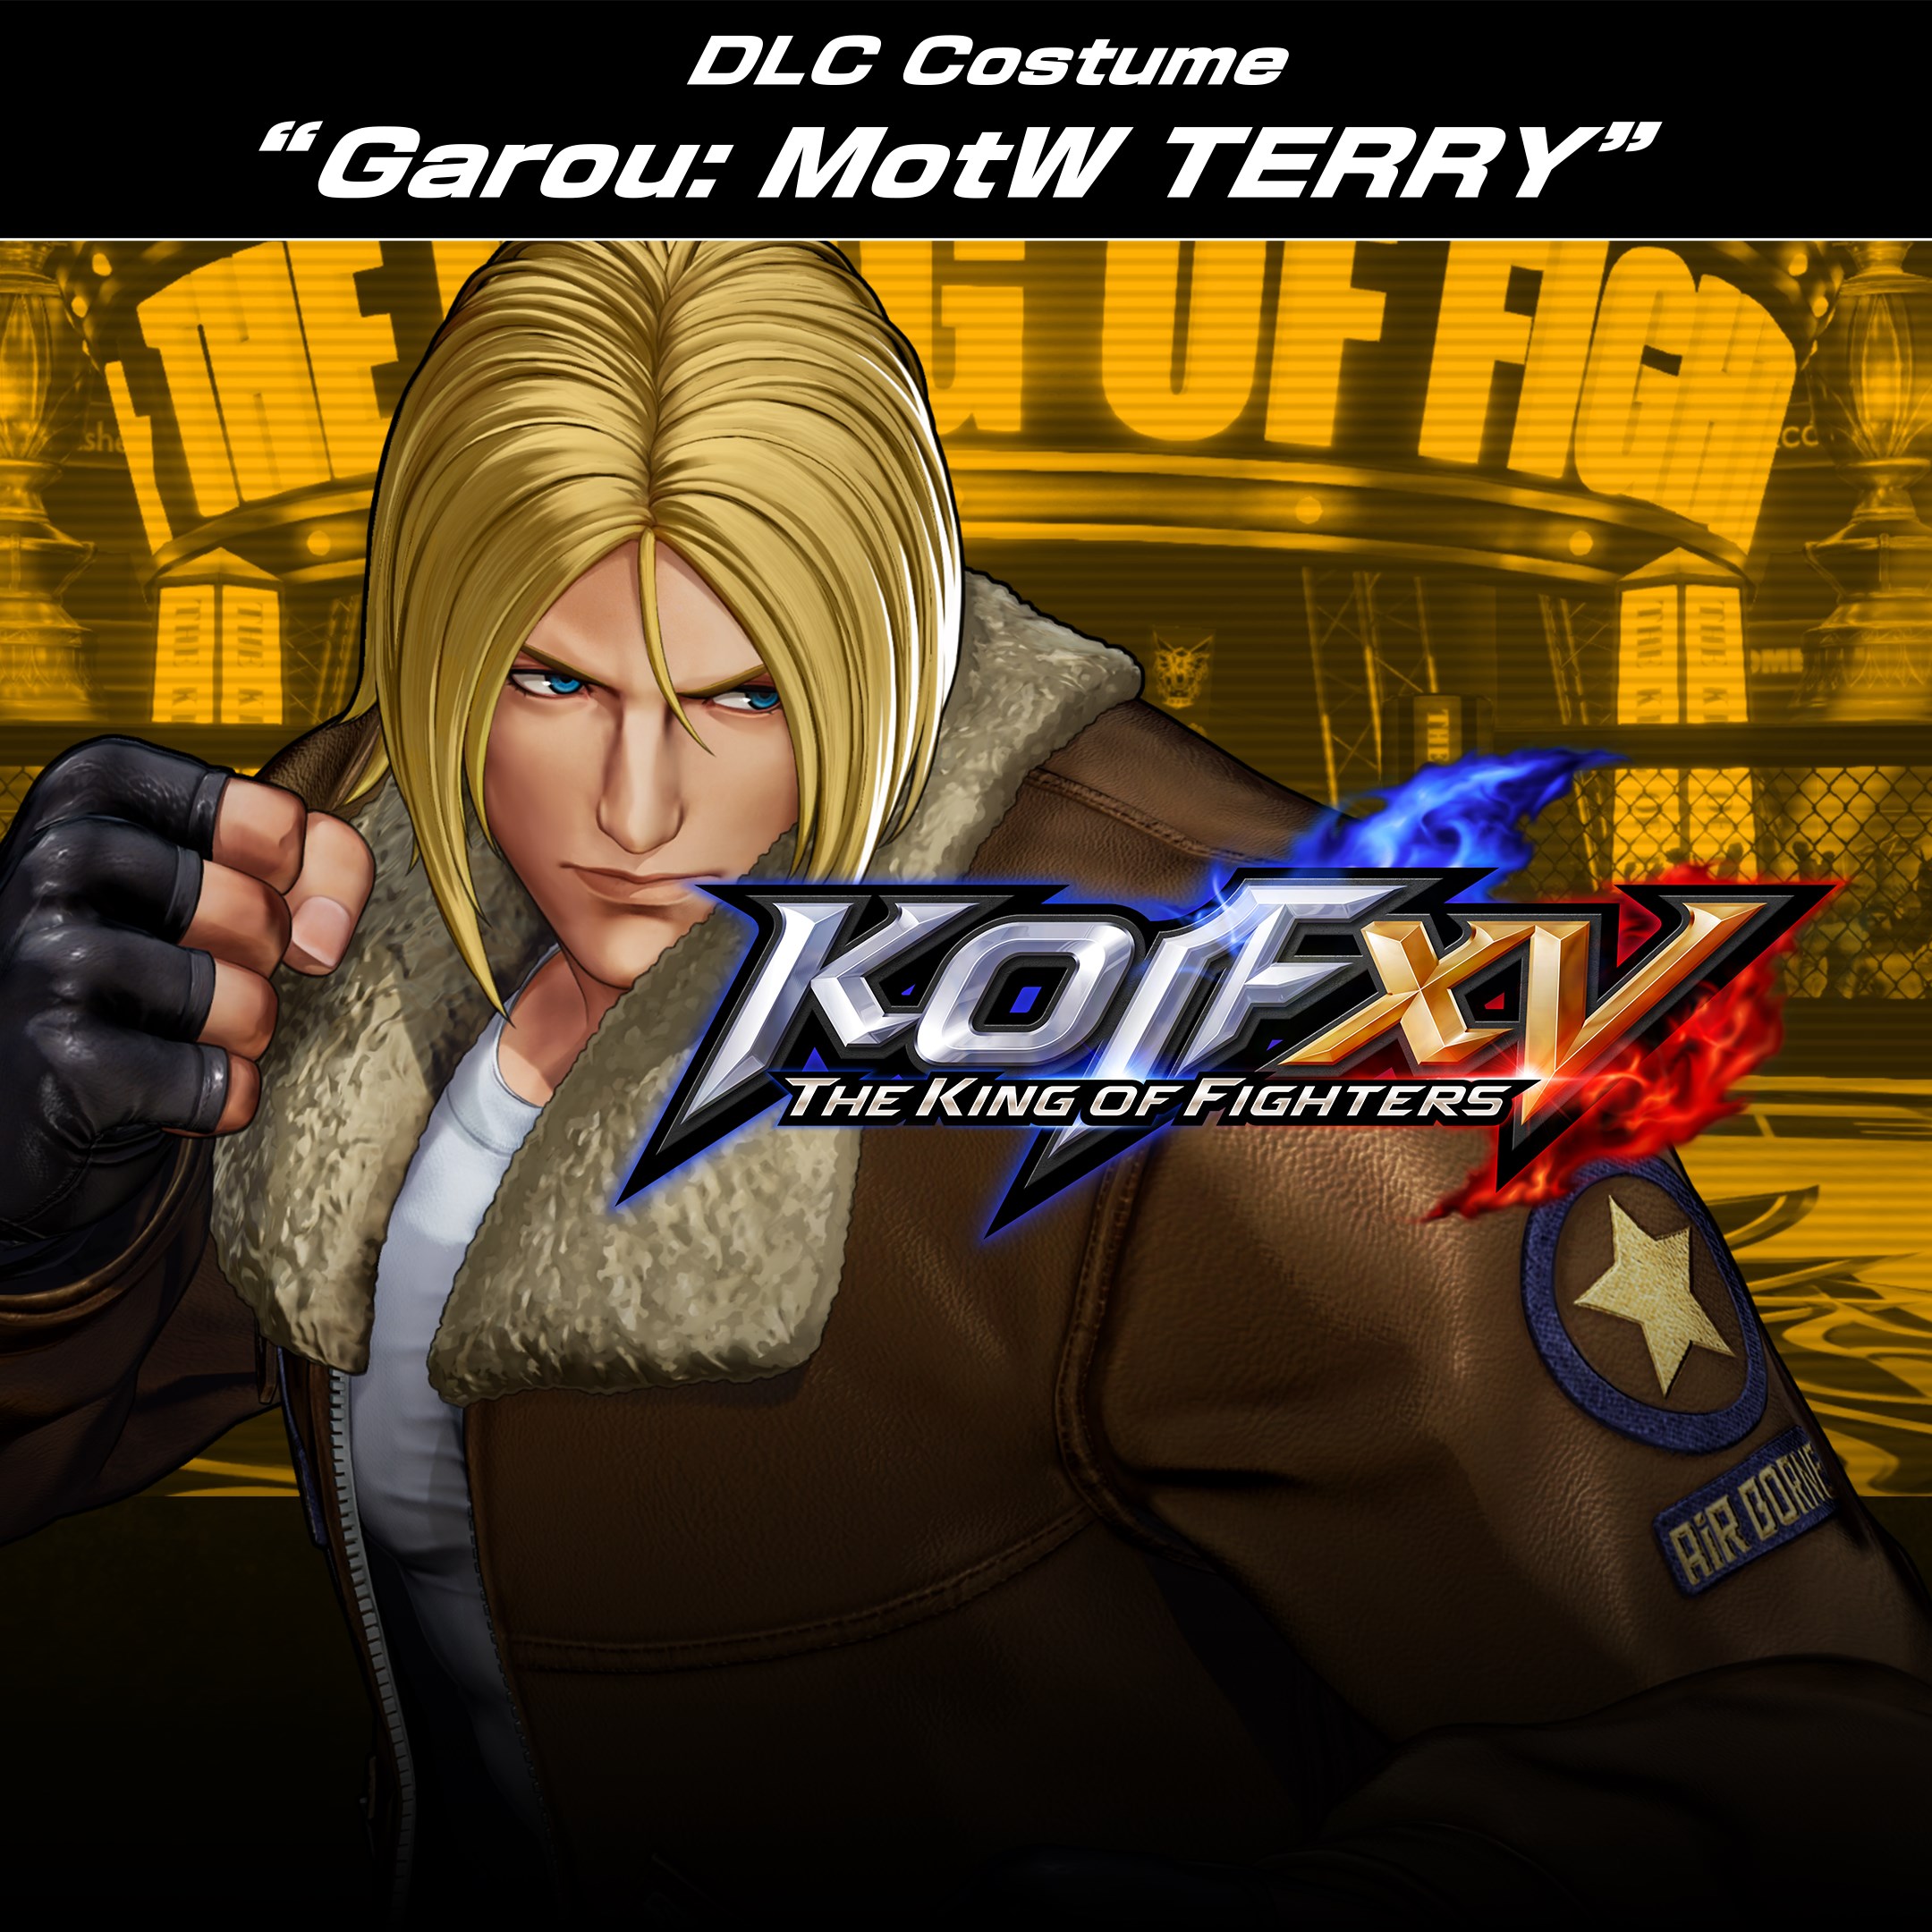 Costume DLC "GAROU: MotW TERRY" di KOF XV